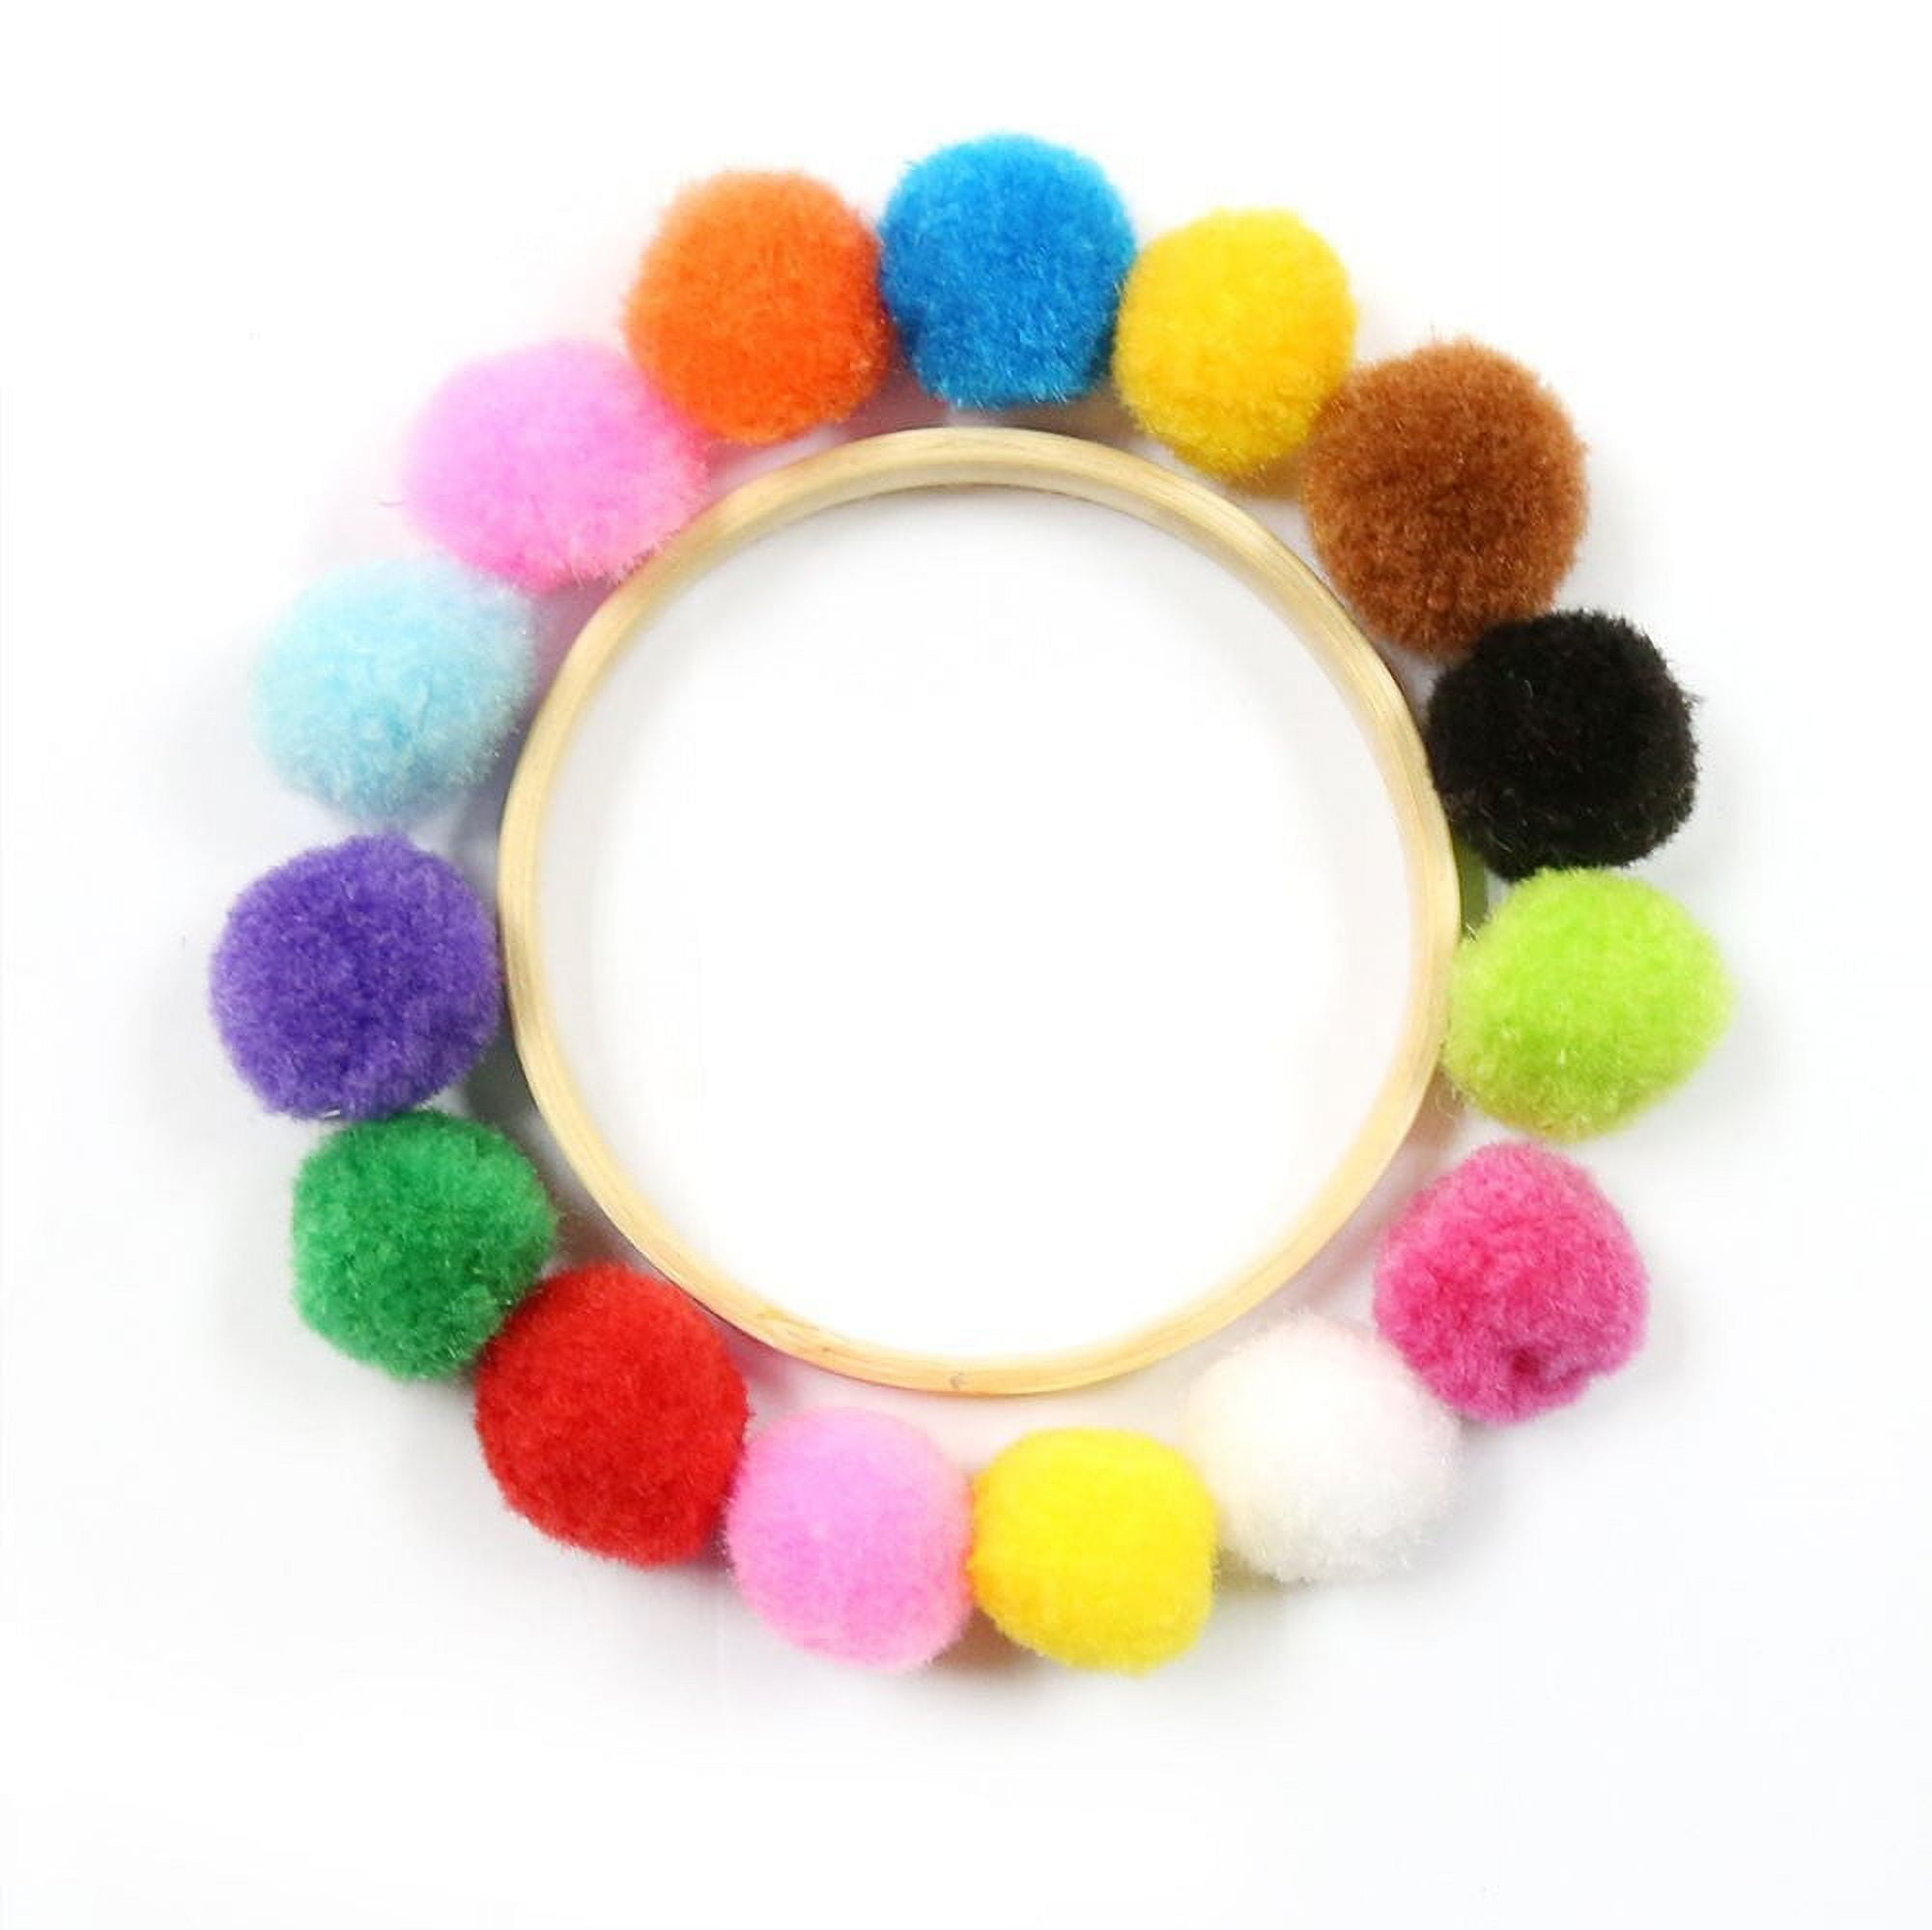 25pcs 20mm Colorful Tube Pom Poms For Crafts